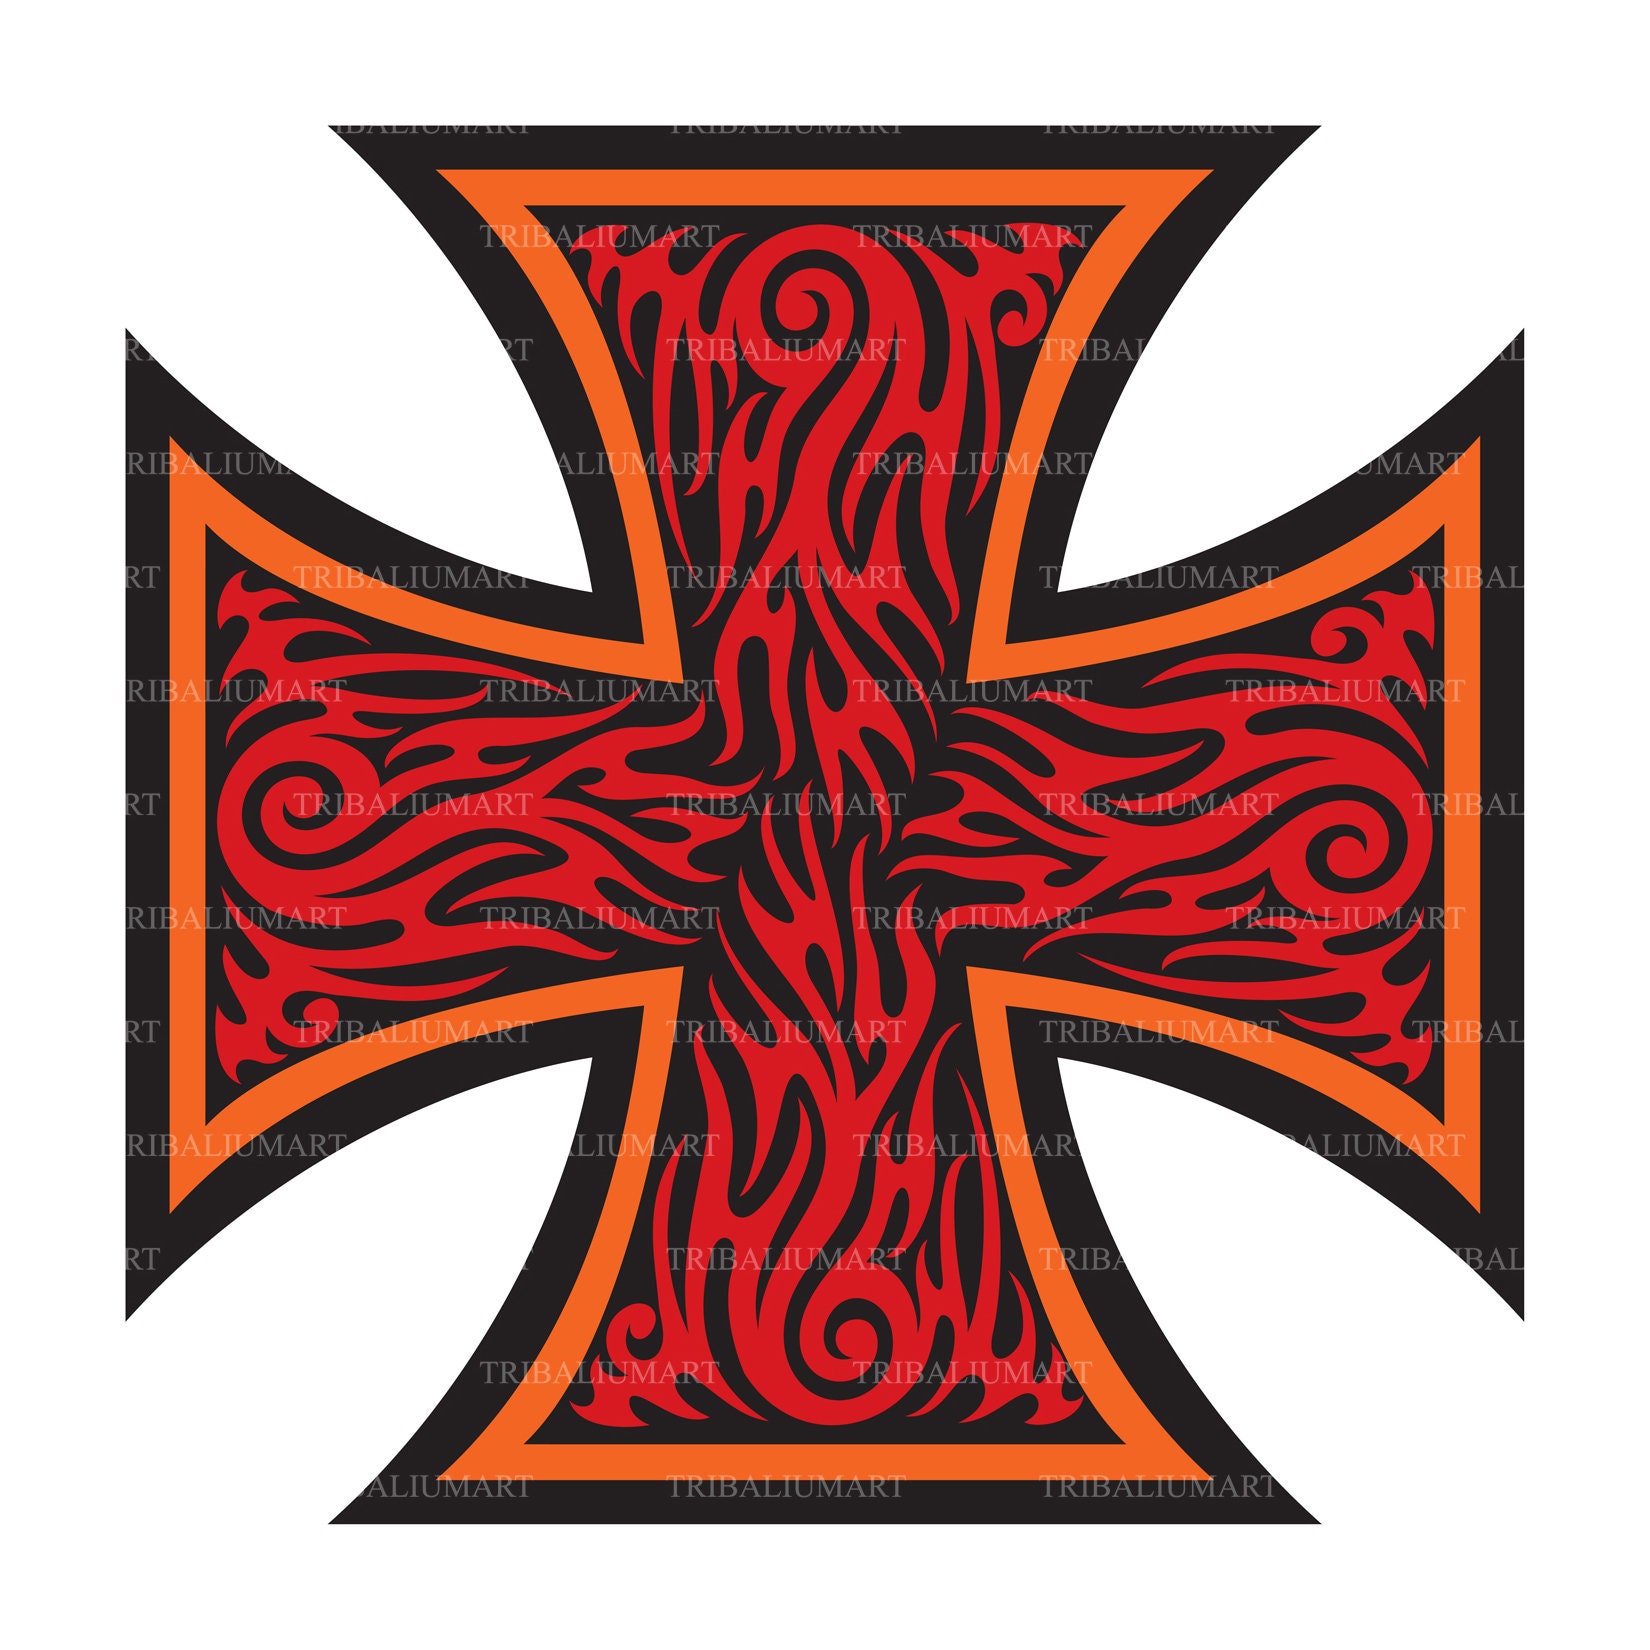 iron cross by twistedrazorblade on DeviantArt